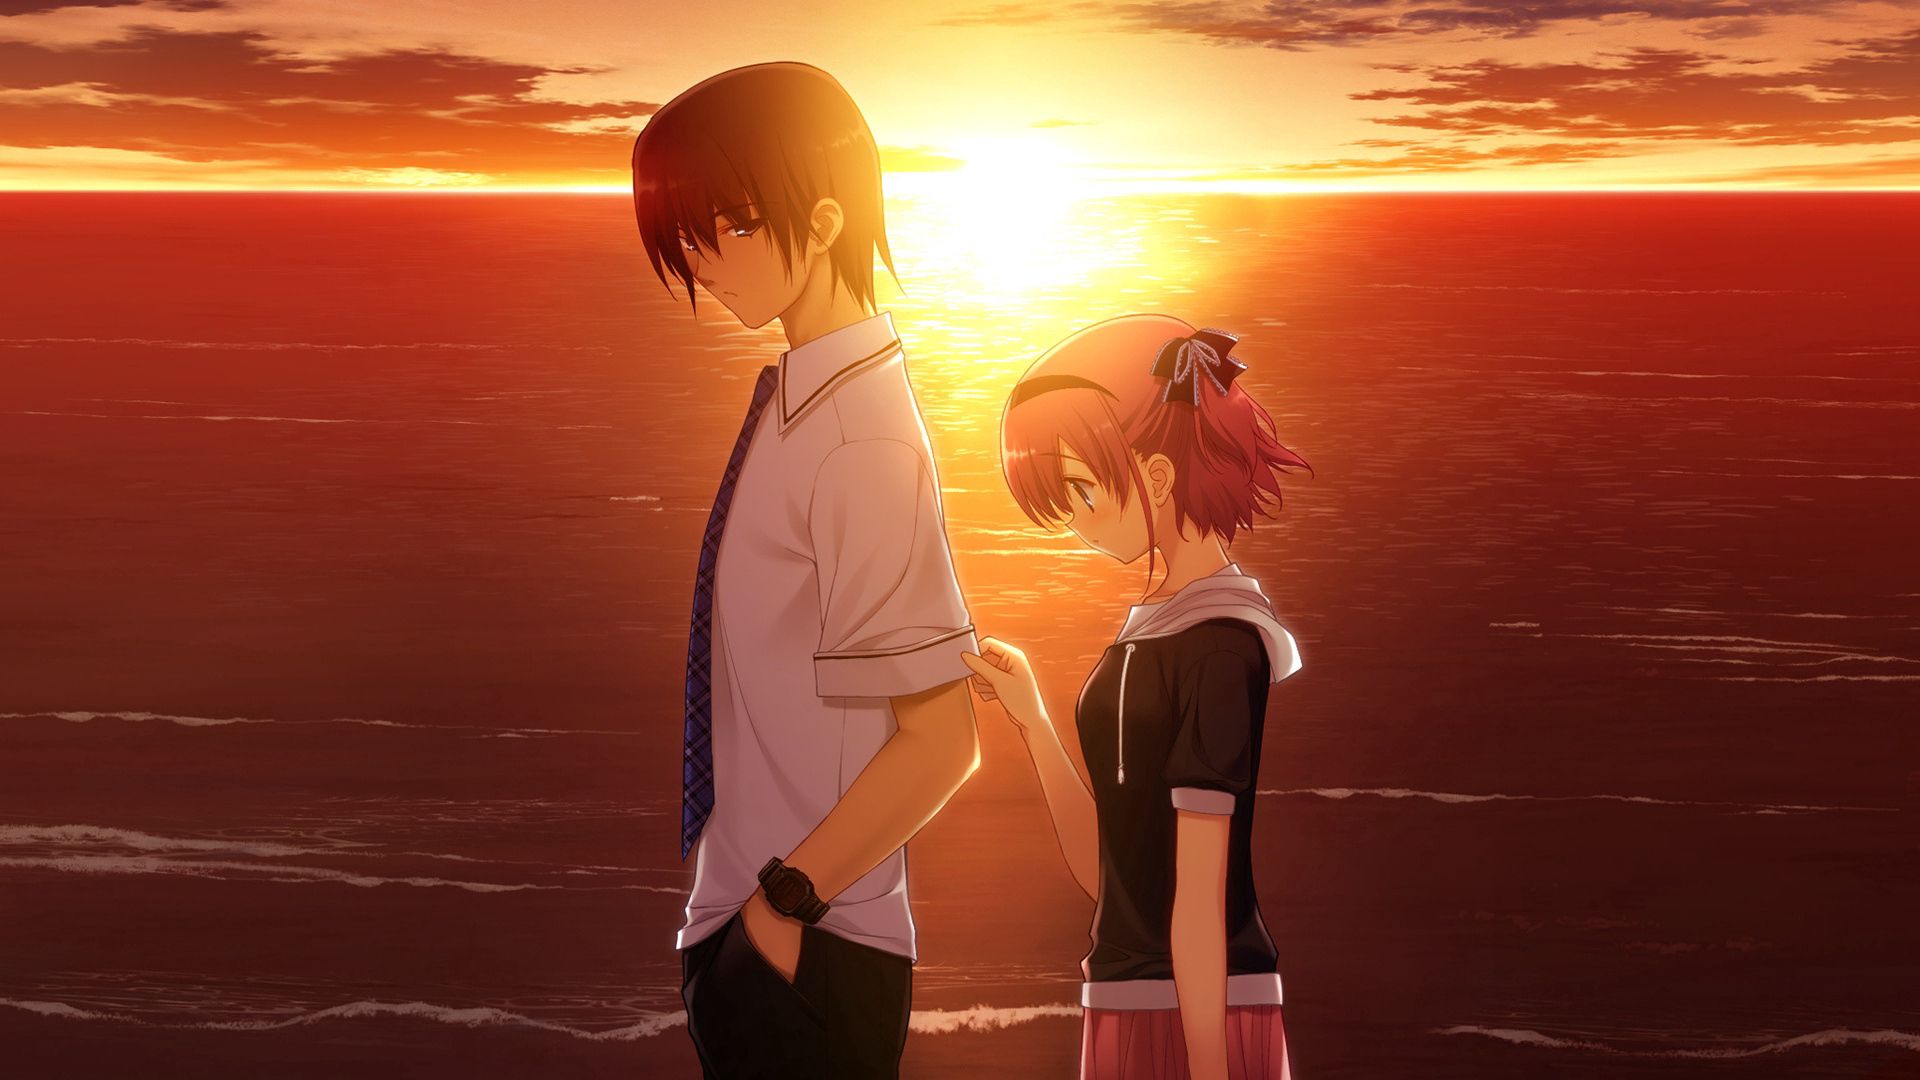 Windows Backgrounds anime, girl, sunset, sadness, guy, sorrow